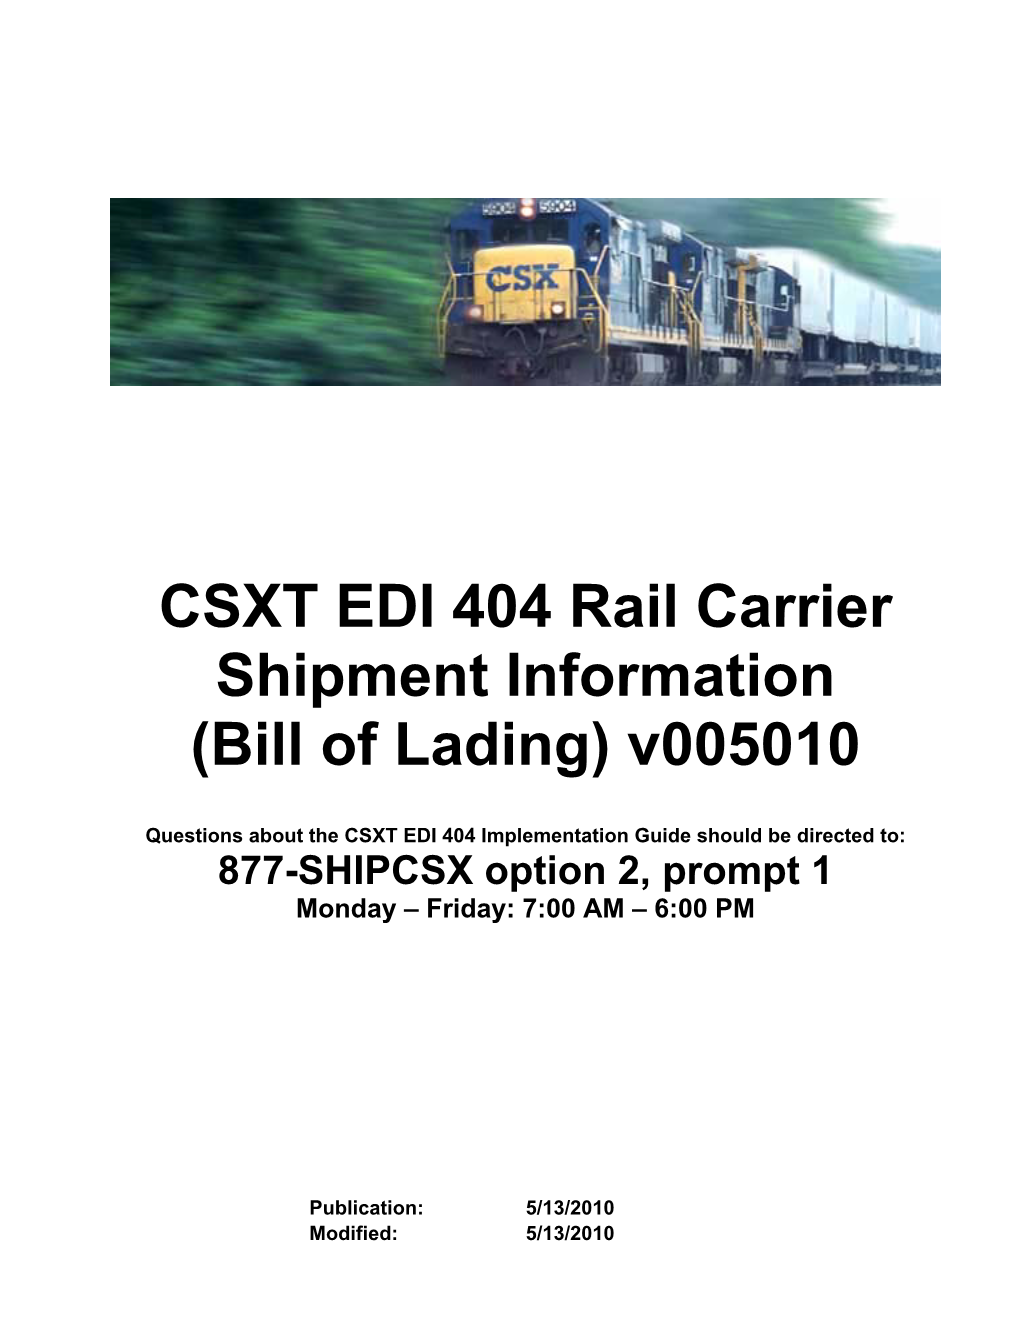 CSXT EDI 404 Rail Carrier Shipment Information (Bill of Lading) V005010